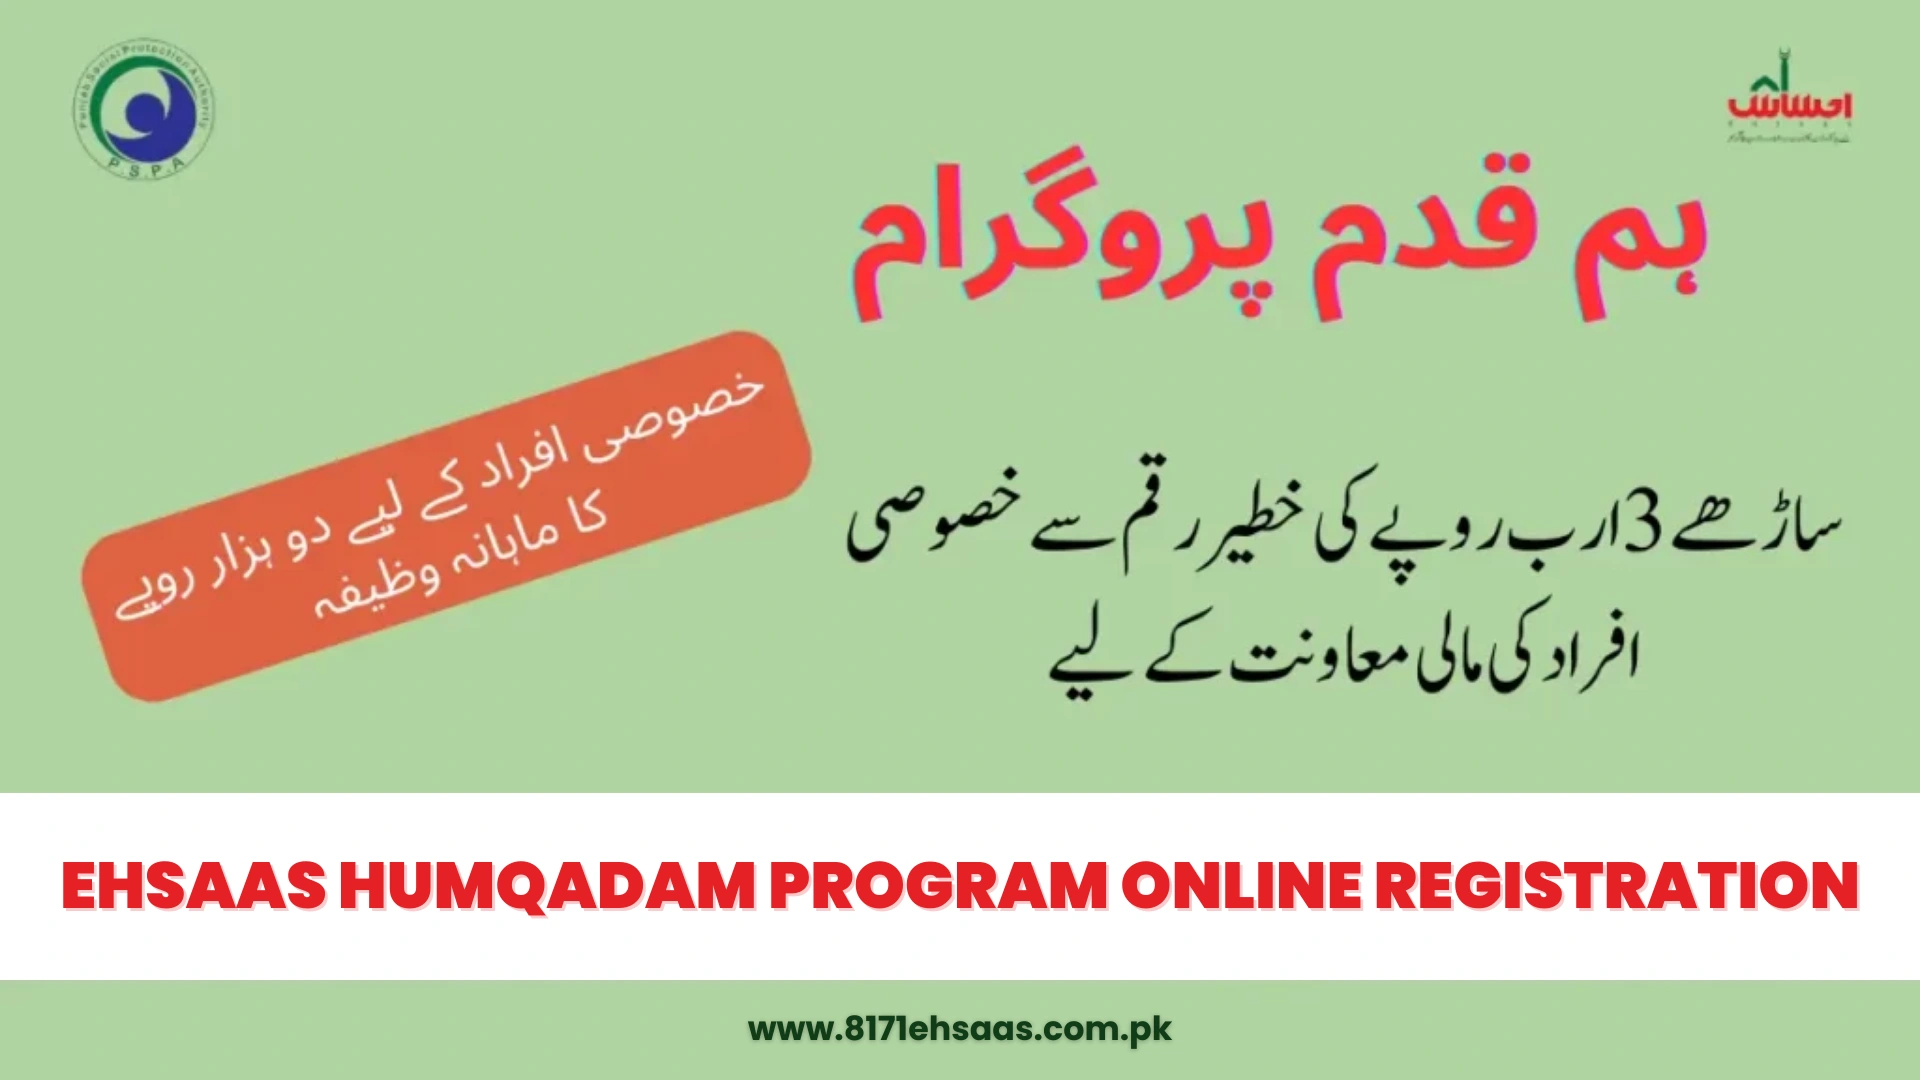 Ehsaas Humqadam Program Online Registration